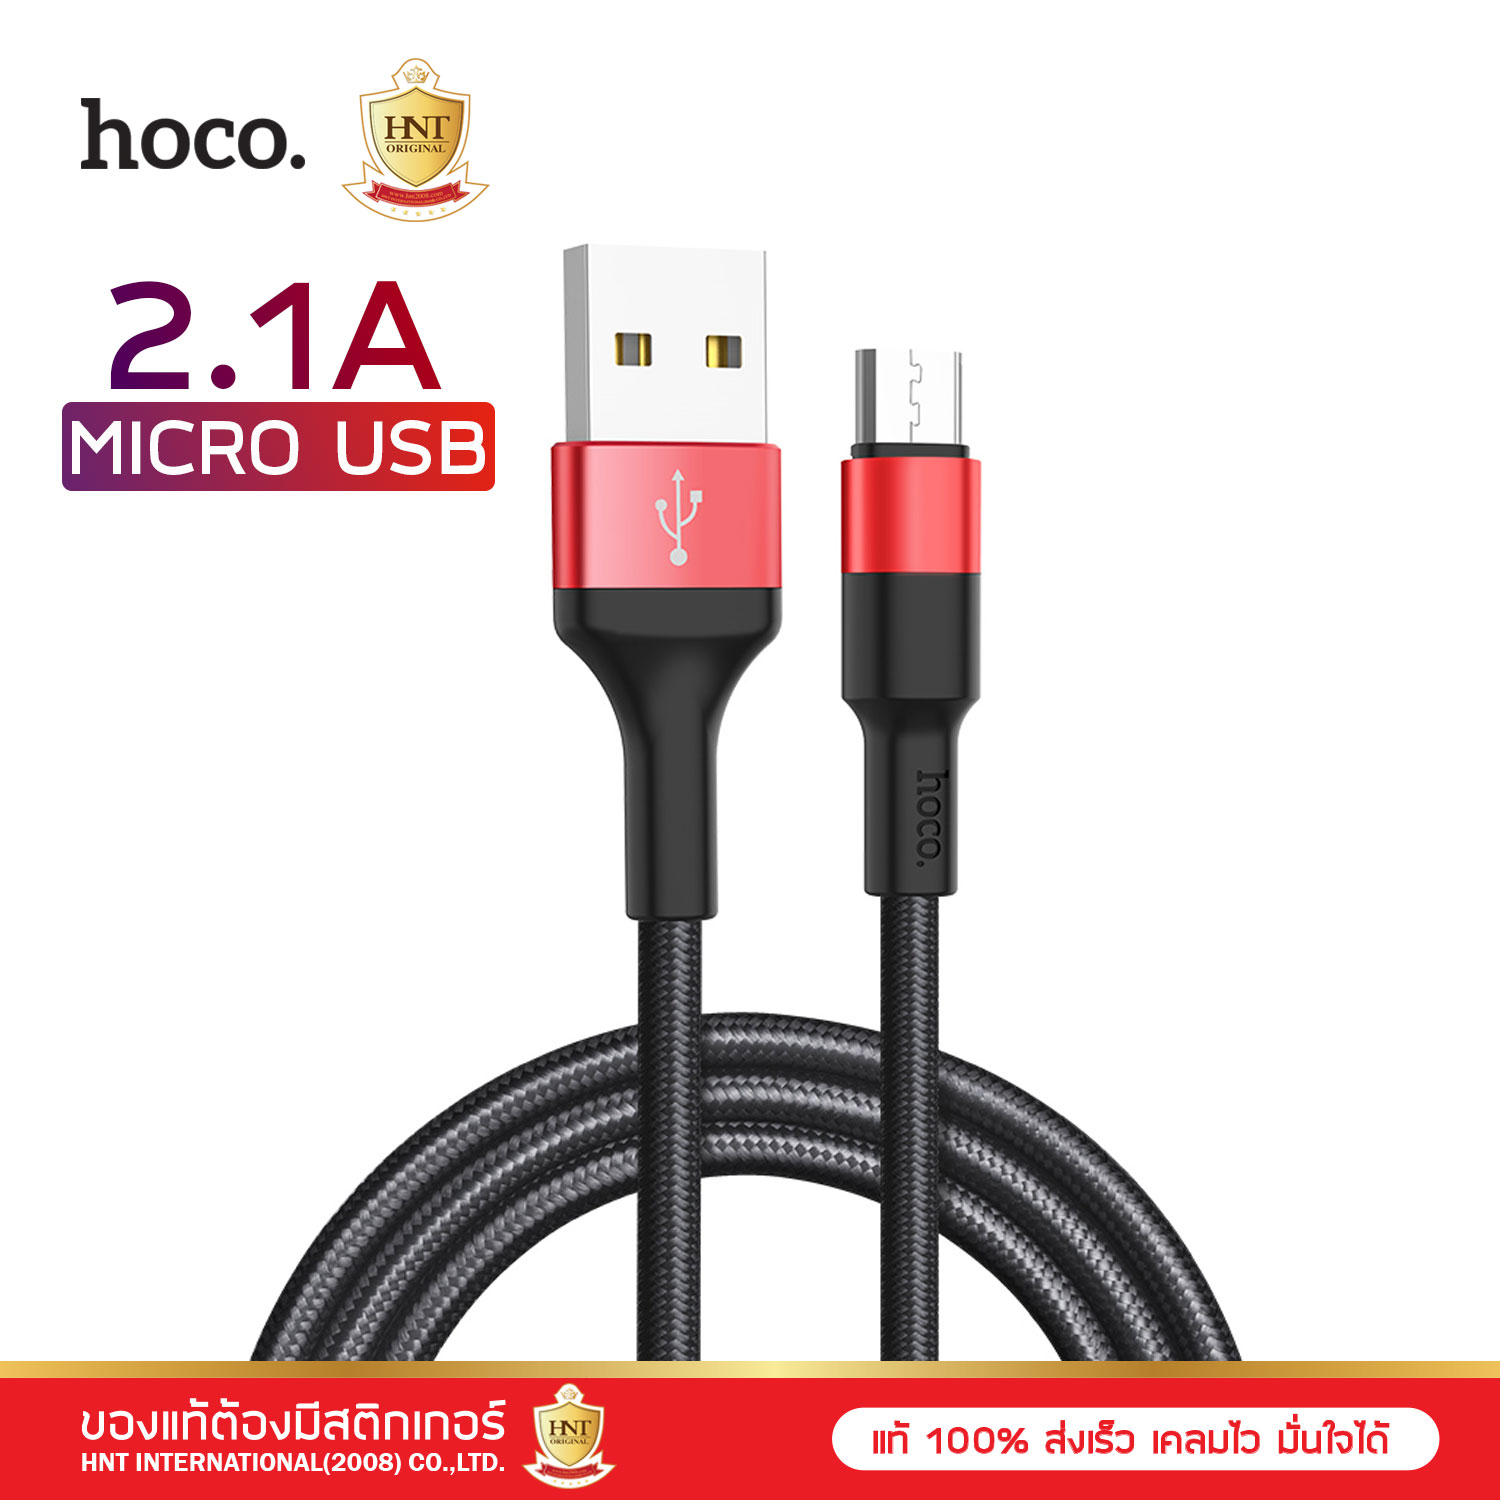 Hoco สายชาร์จ พอร์ต Micro USB รุ่น X26 charging data sync สายชาร์จมือถือ สายชาร์จ สายชาร์จโทรศัพท์ รับประกันการใช้งาน 6 เดือน HNT